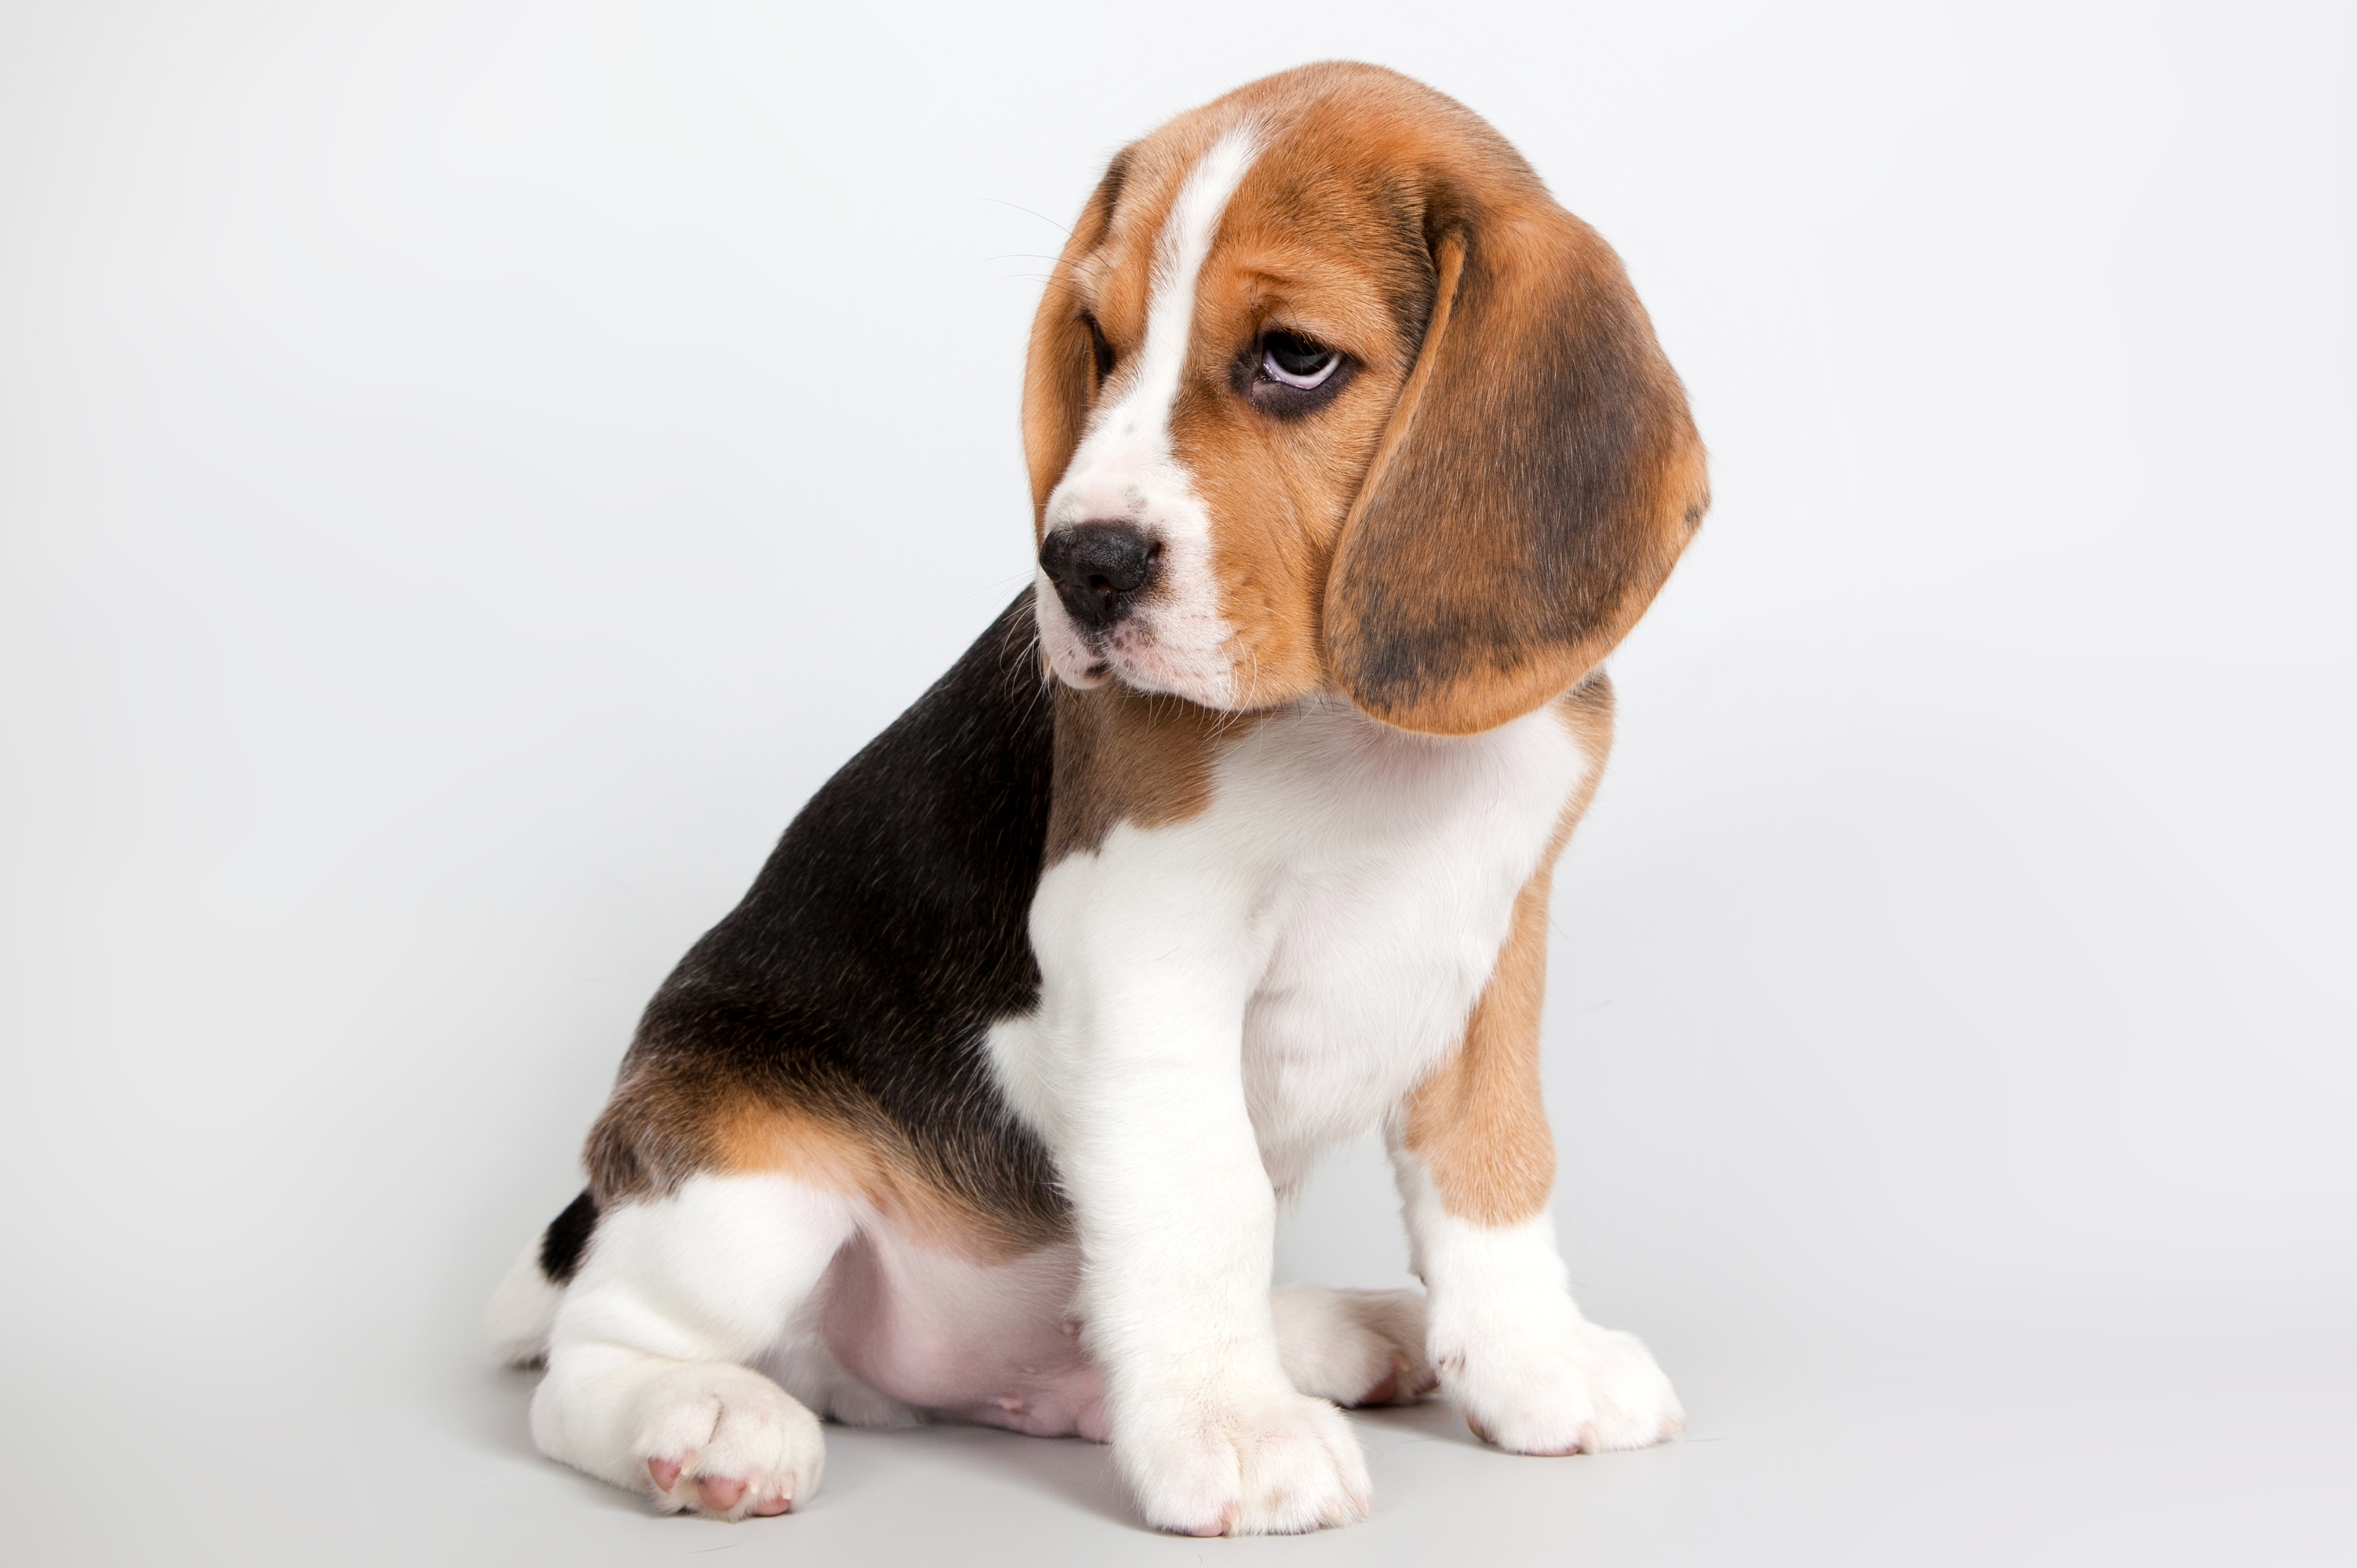 Baby Animal Beagle Cute Dog Pet Puppy 3600x2395